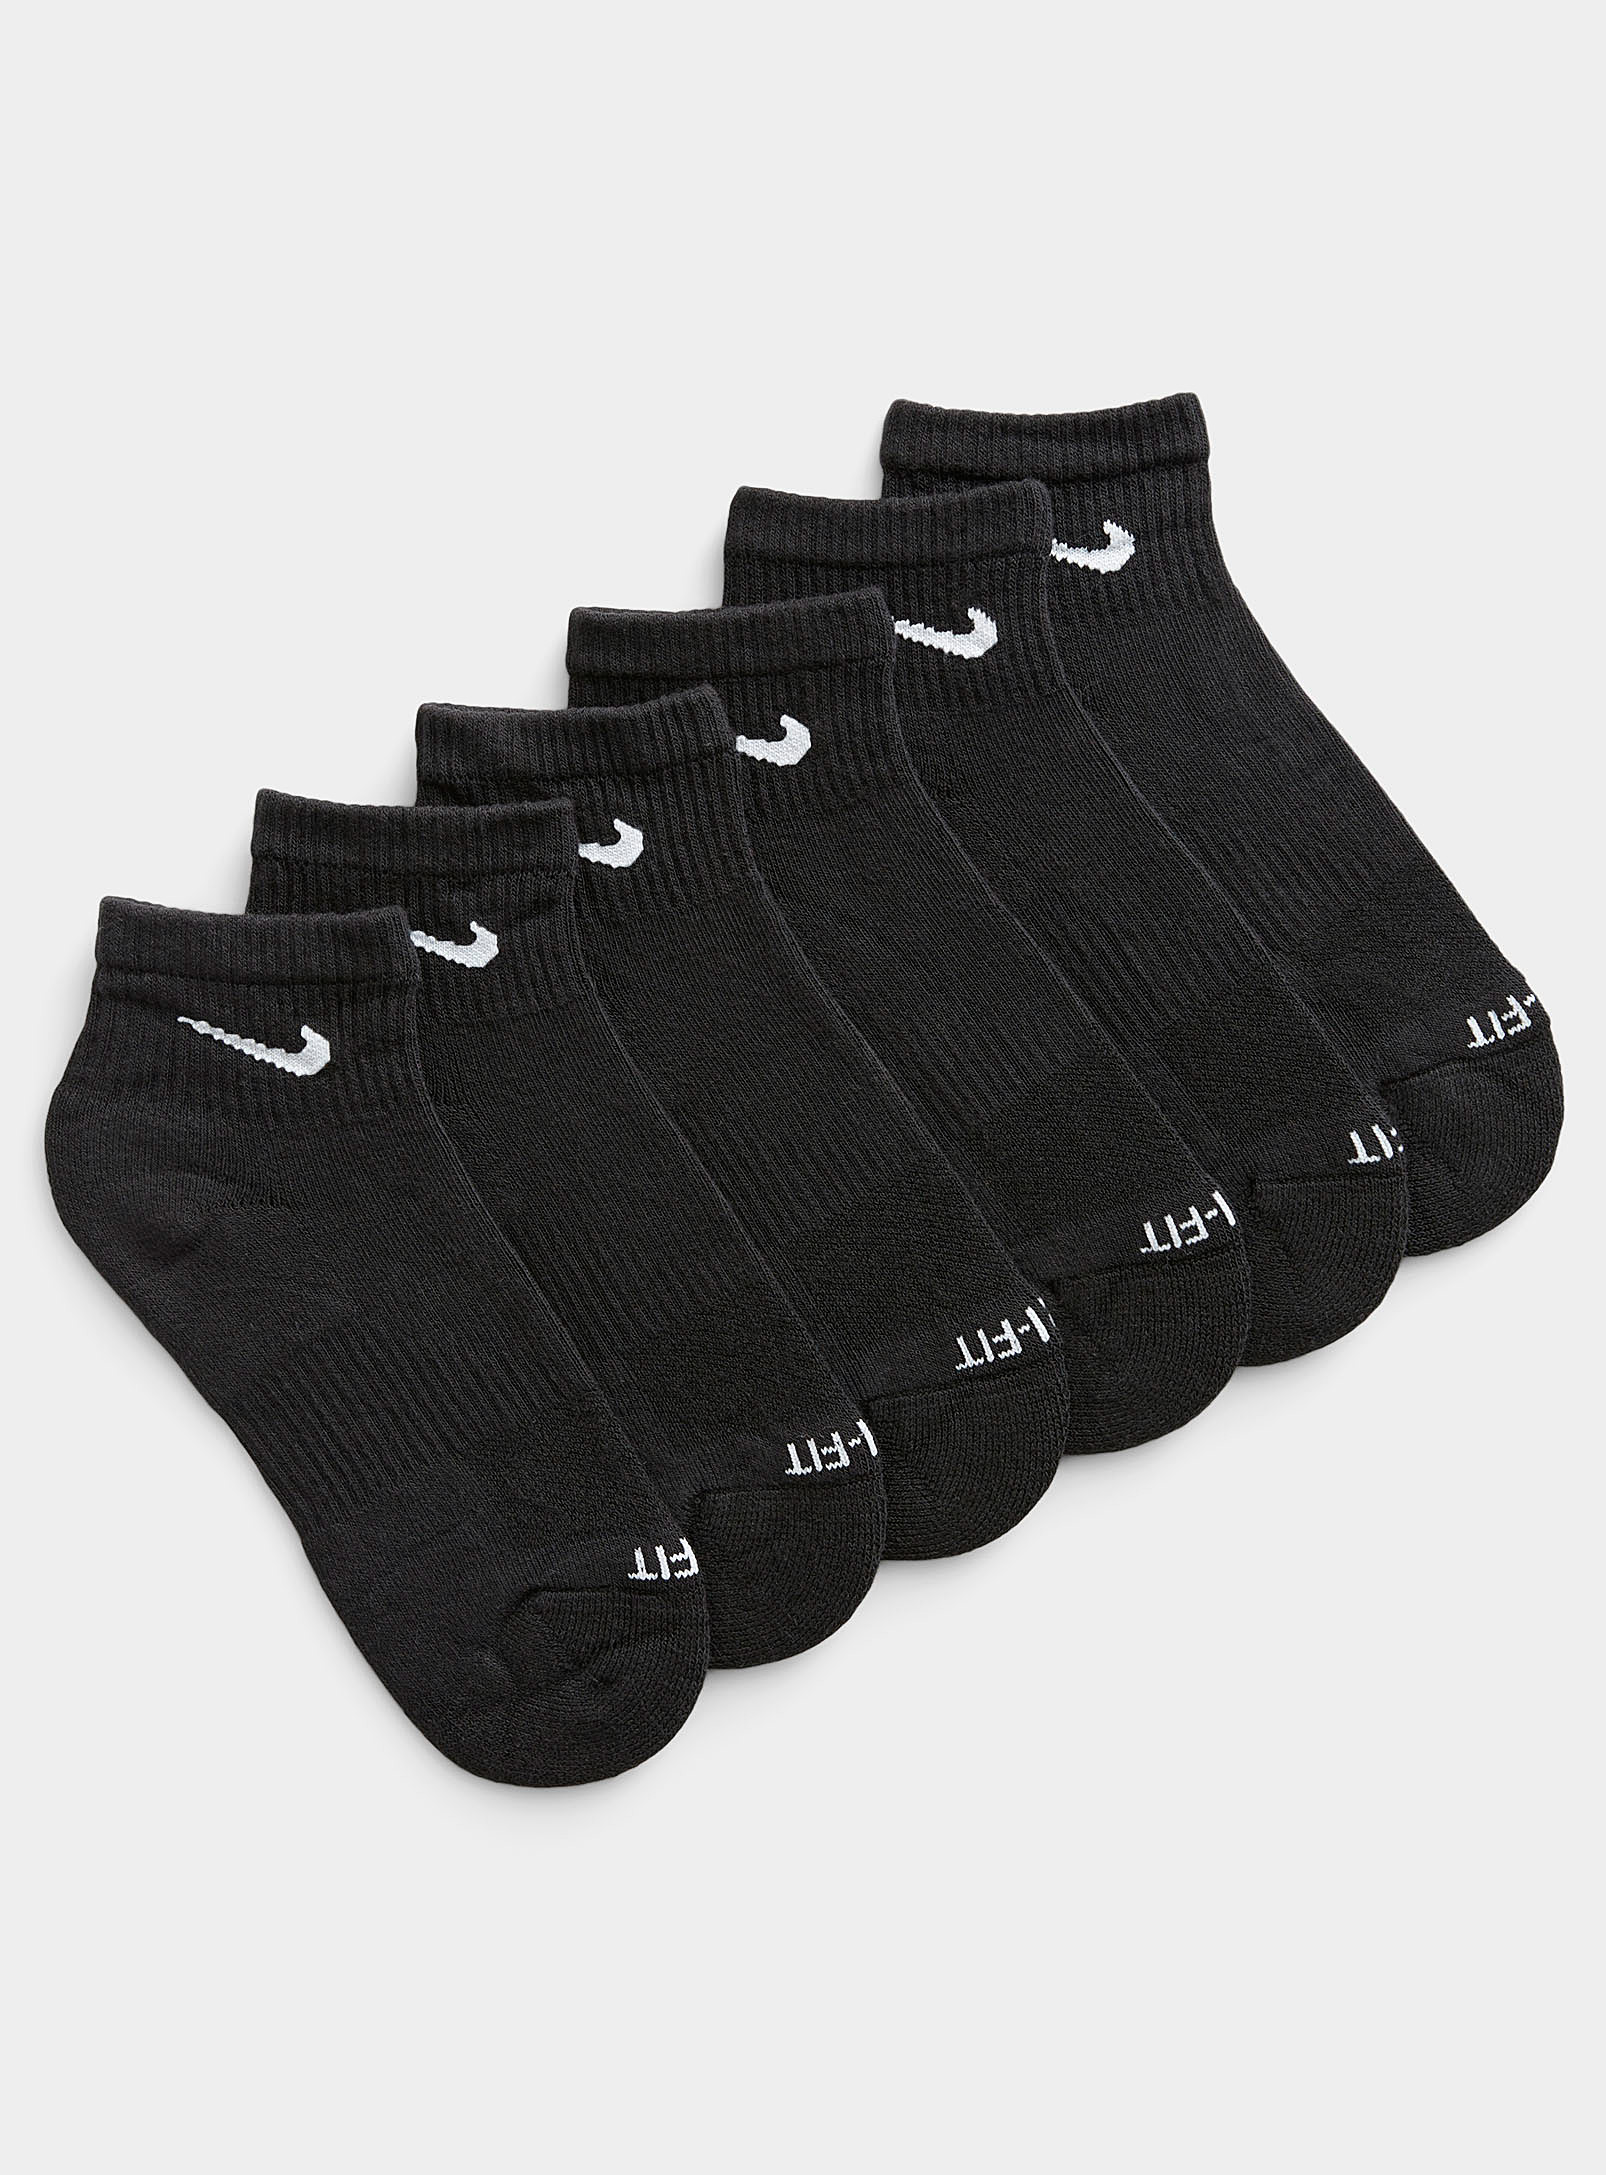 Nike - Women's Everyday Plus ankle socks Set of 6